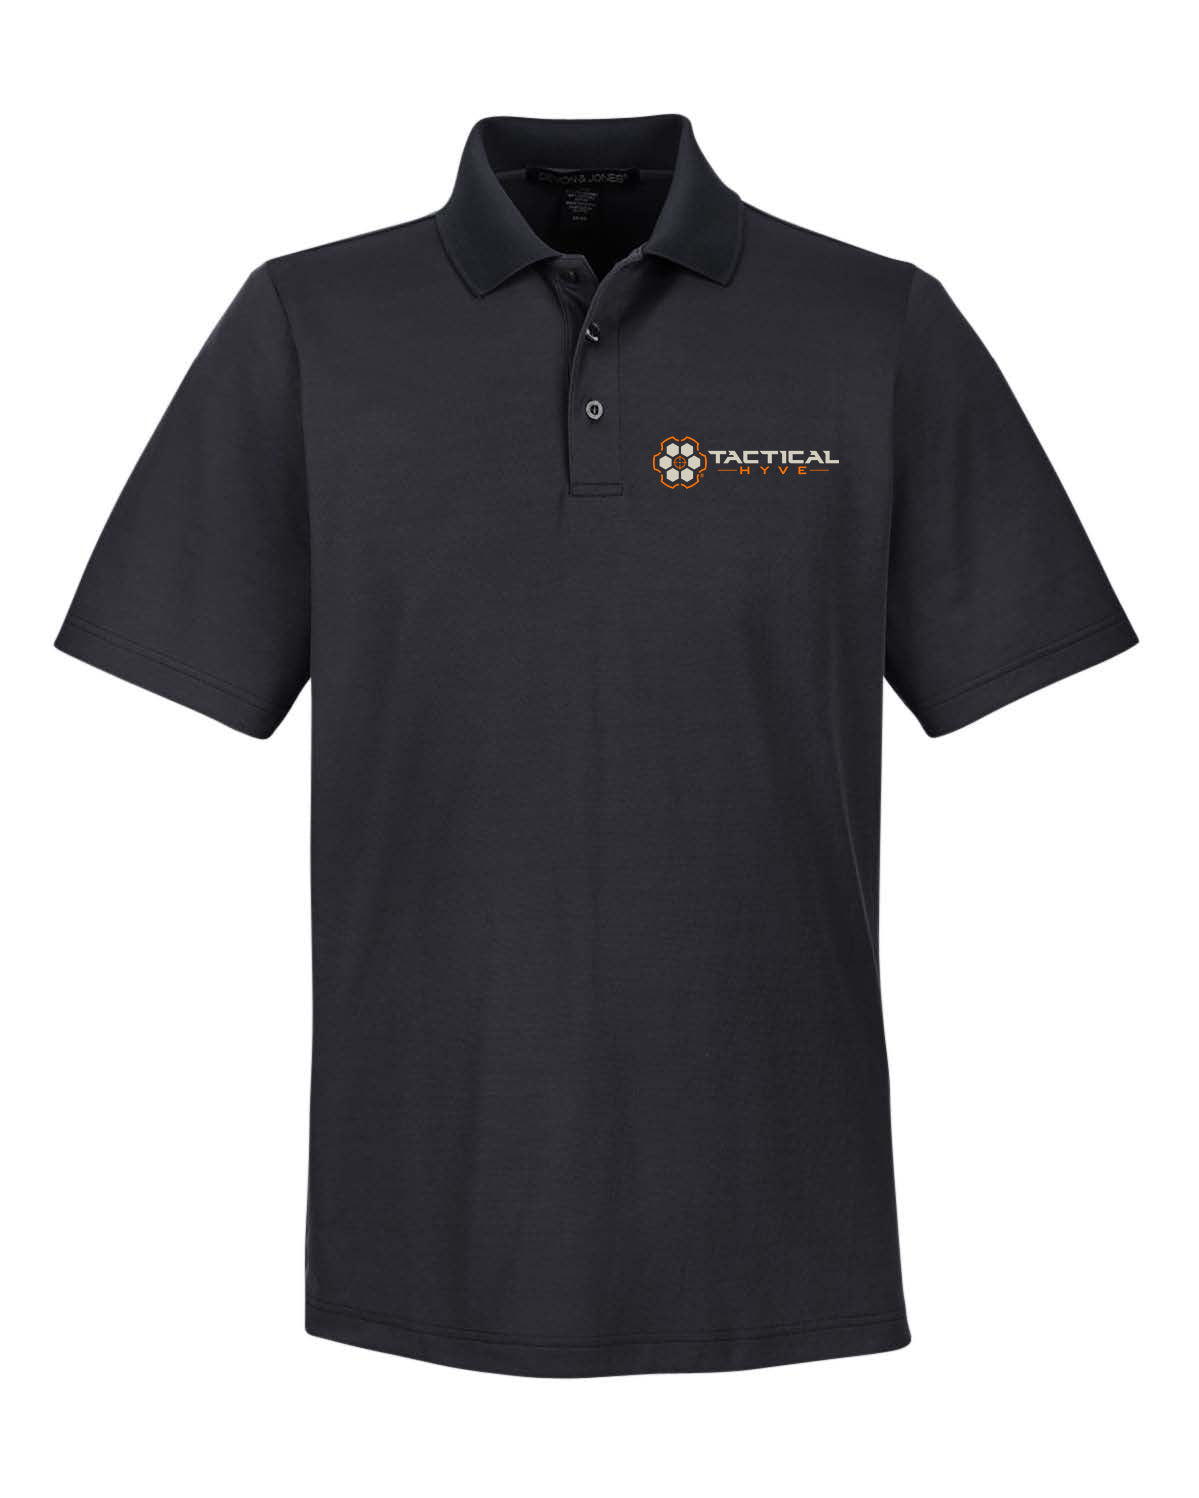 Tactical Hyve Subject Matter Expert (SME) Collared Shirt